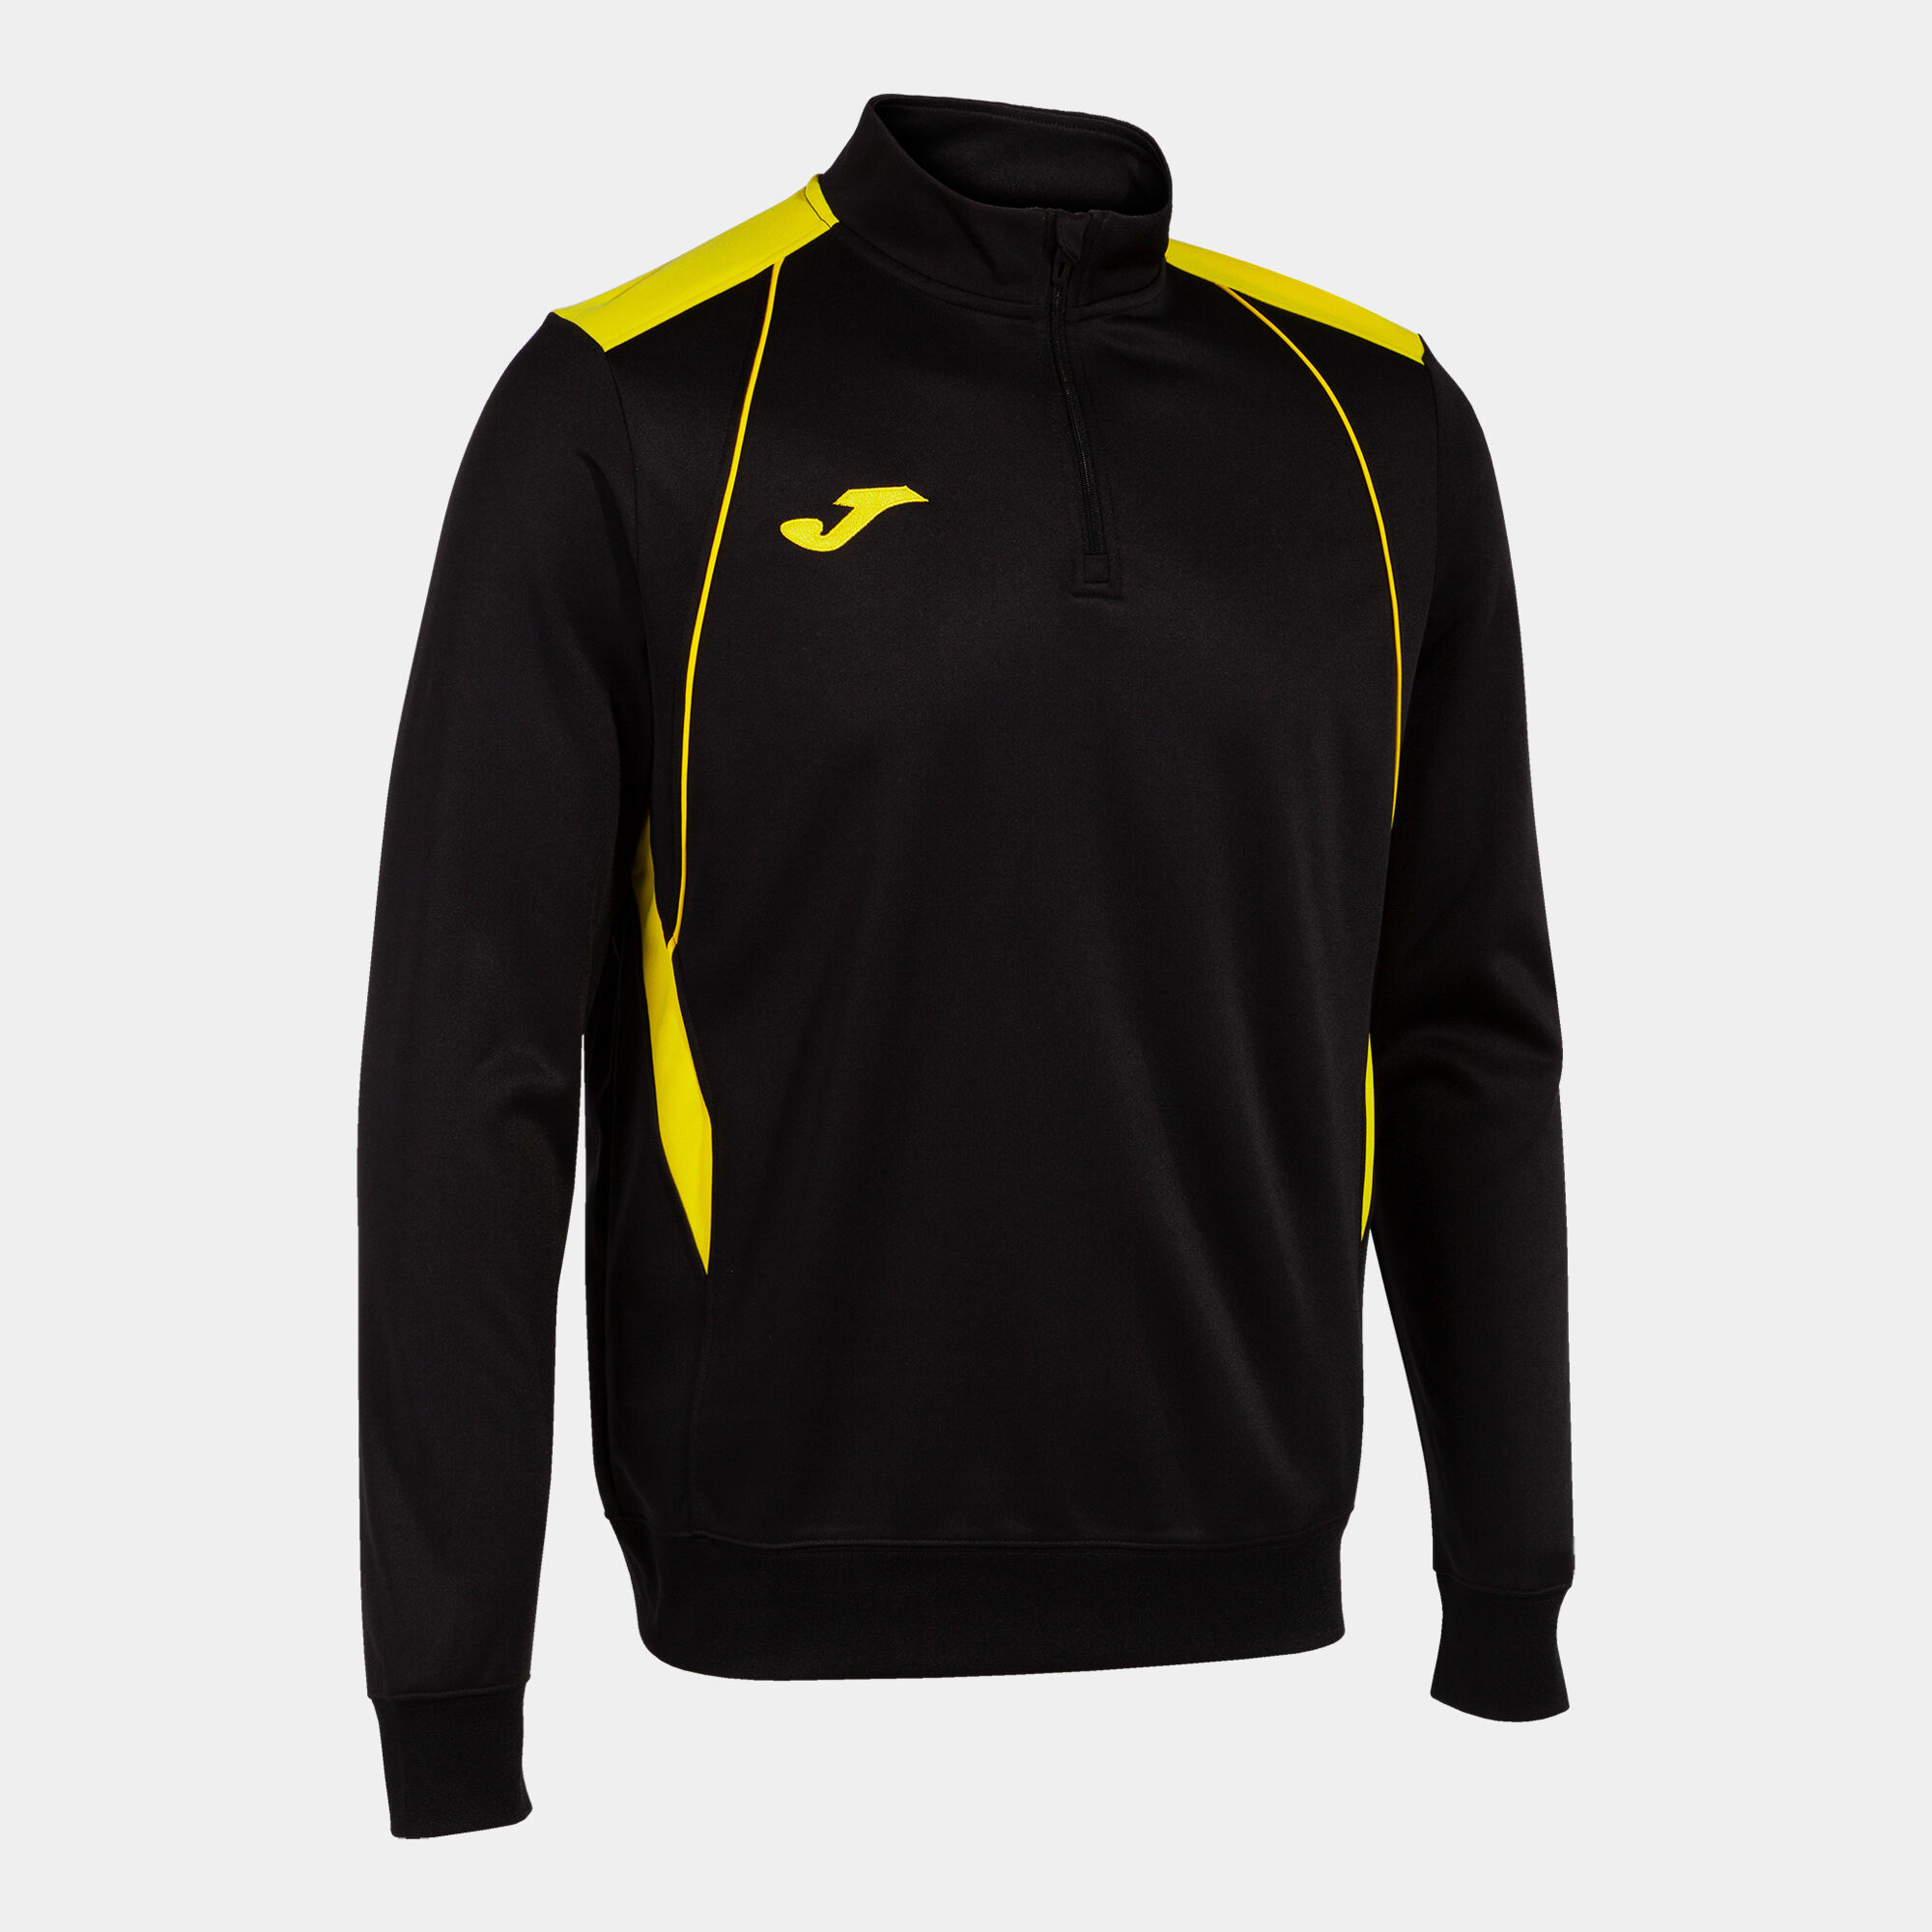 Sweat-shirt homme Championship VII noir jaune